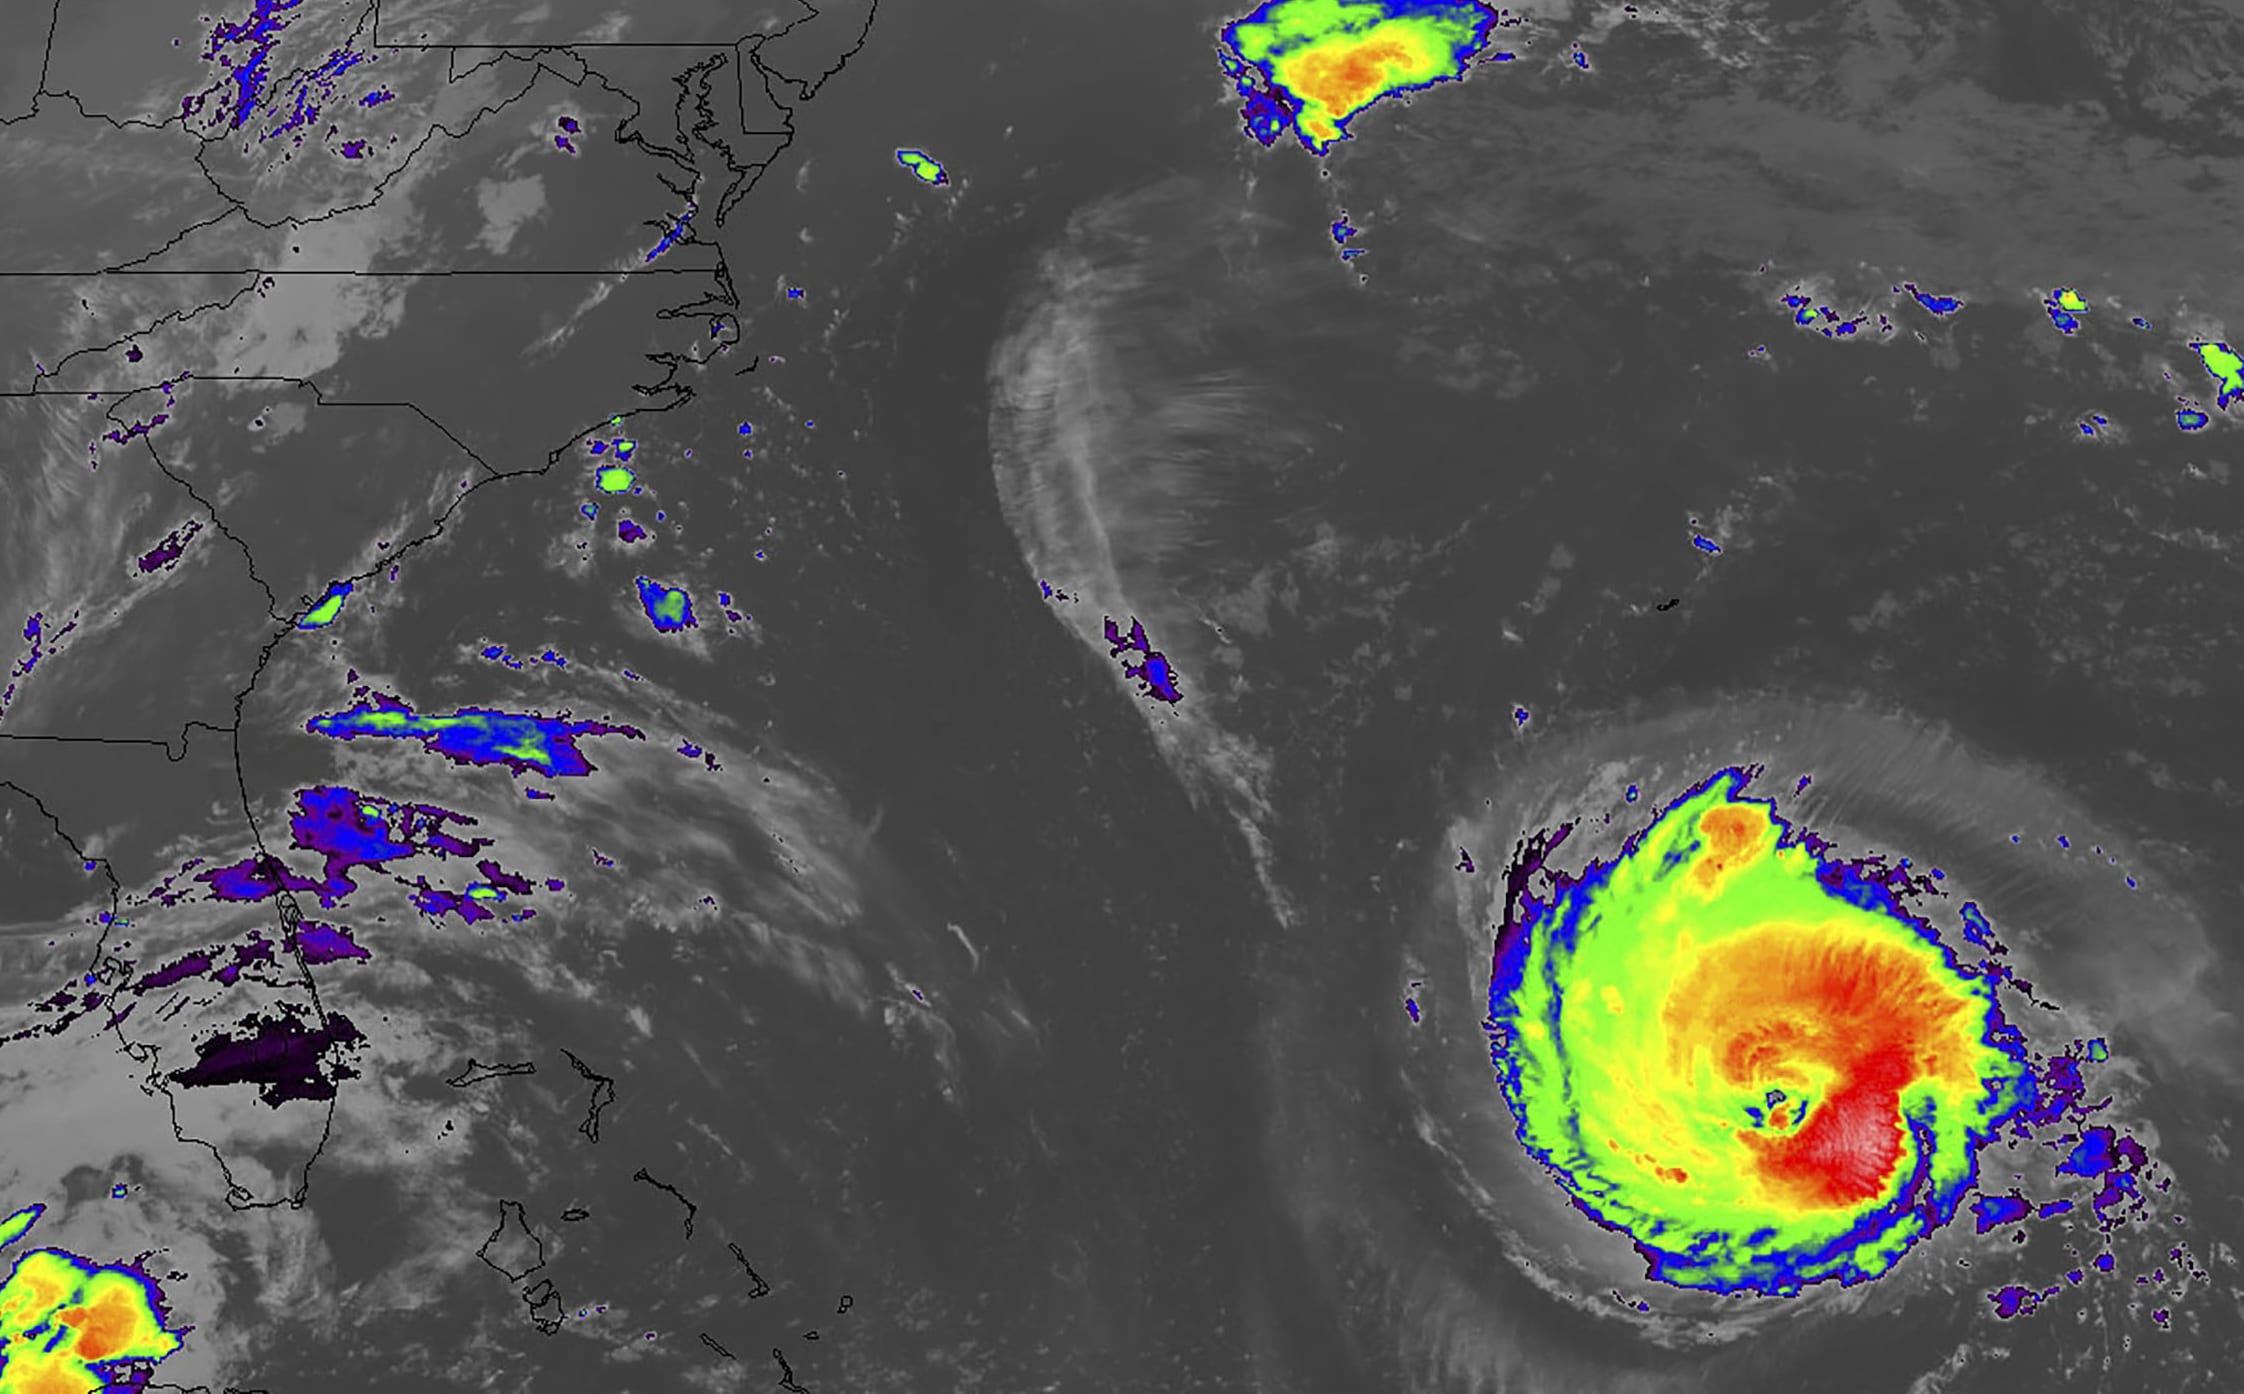 Hurricane Florence heading towards the US East Coast.